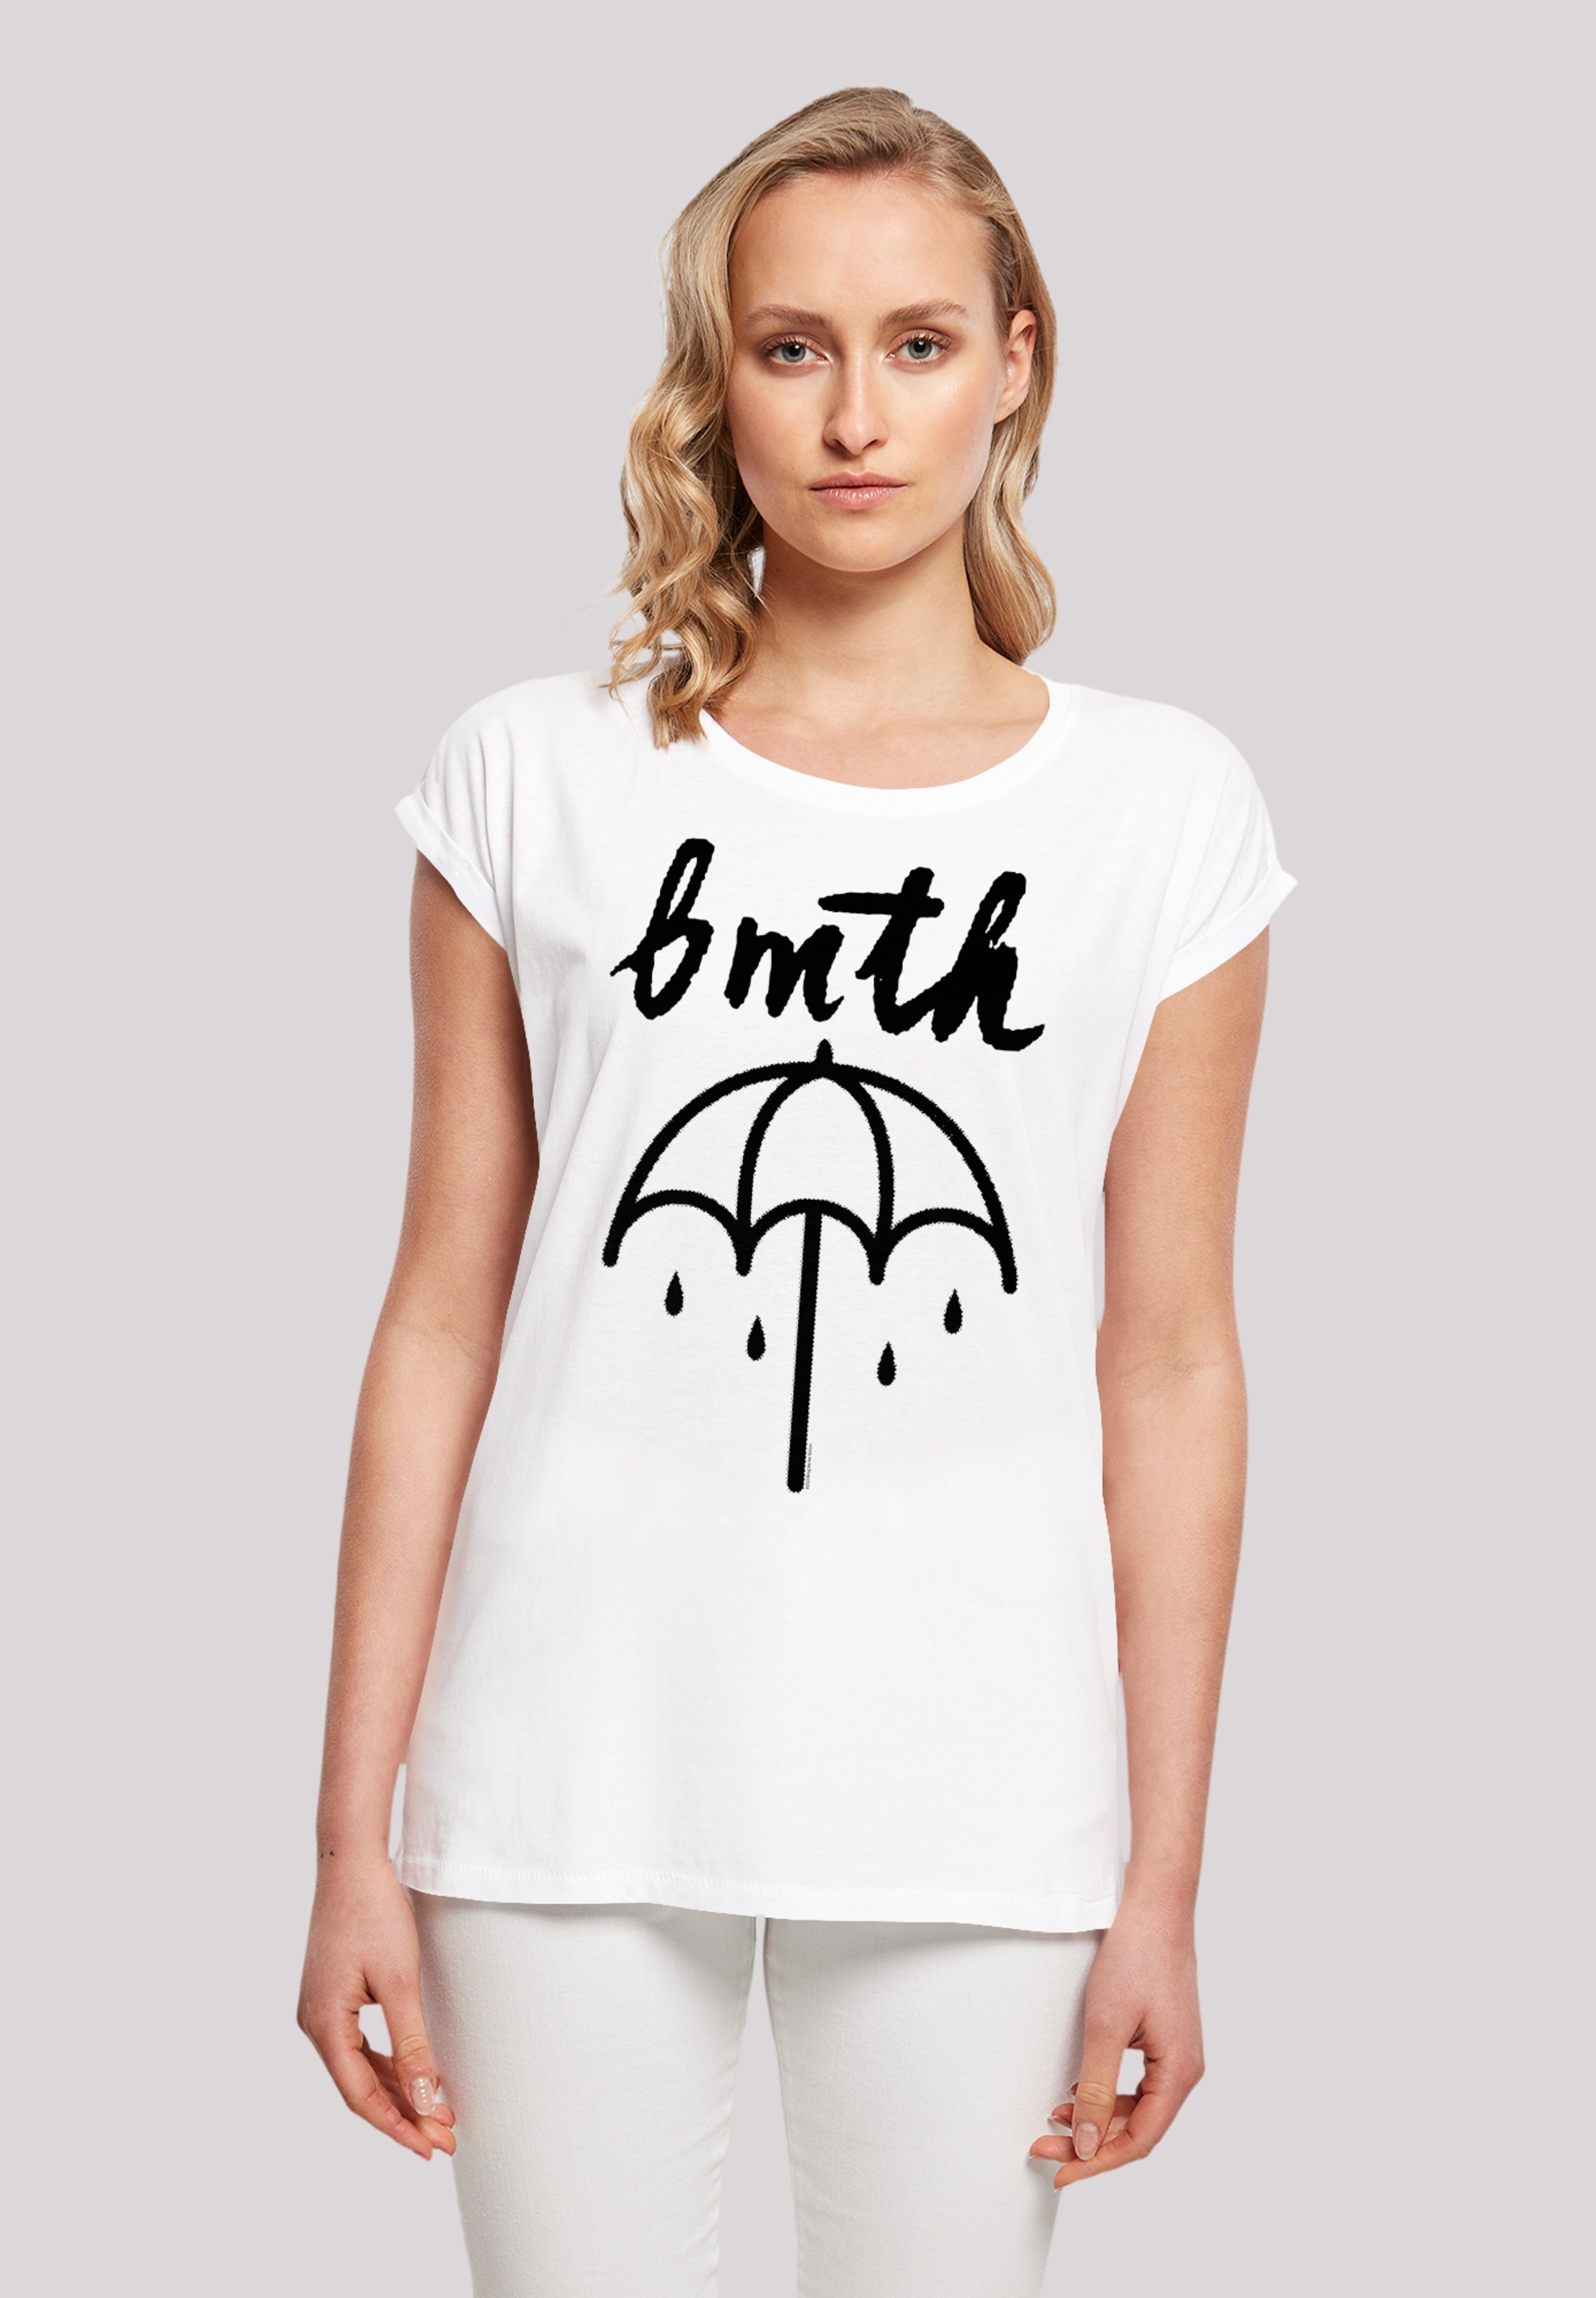 Umbrella«, »BMTH F4NT4STIC Qualität, Band Metal | Band Rock-Musik, Premium T-Shirt walking I\'m